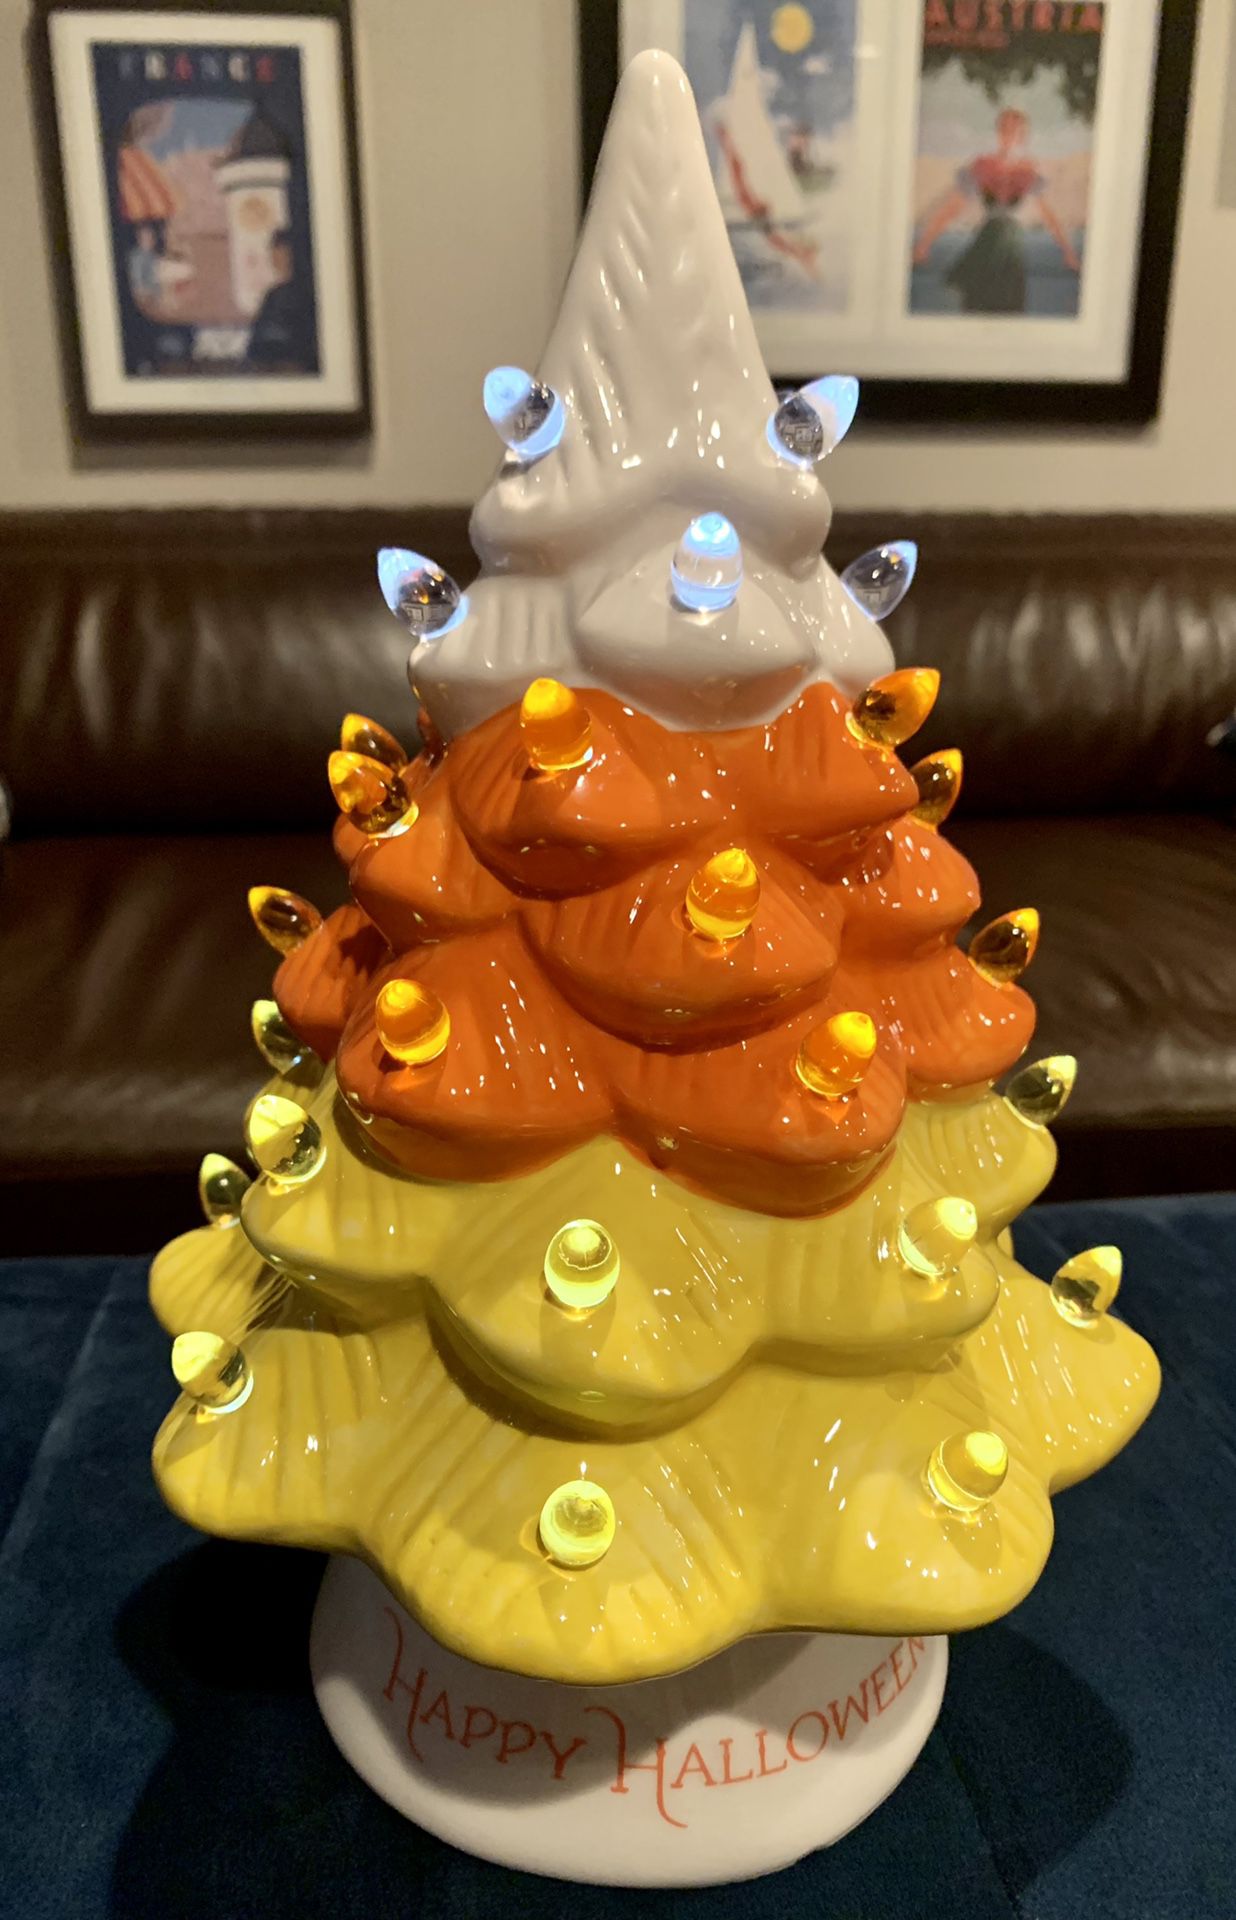 Mr. Halloween 12” Light Up Ceramic Candy Corn Tree